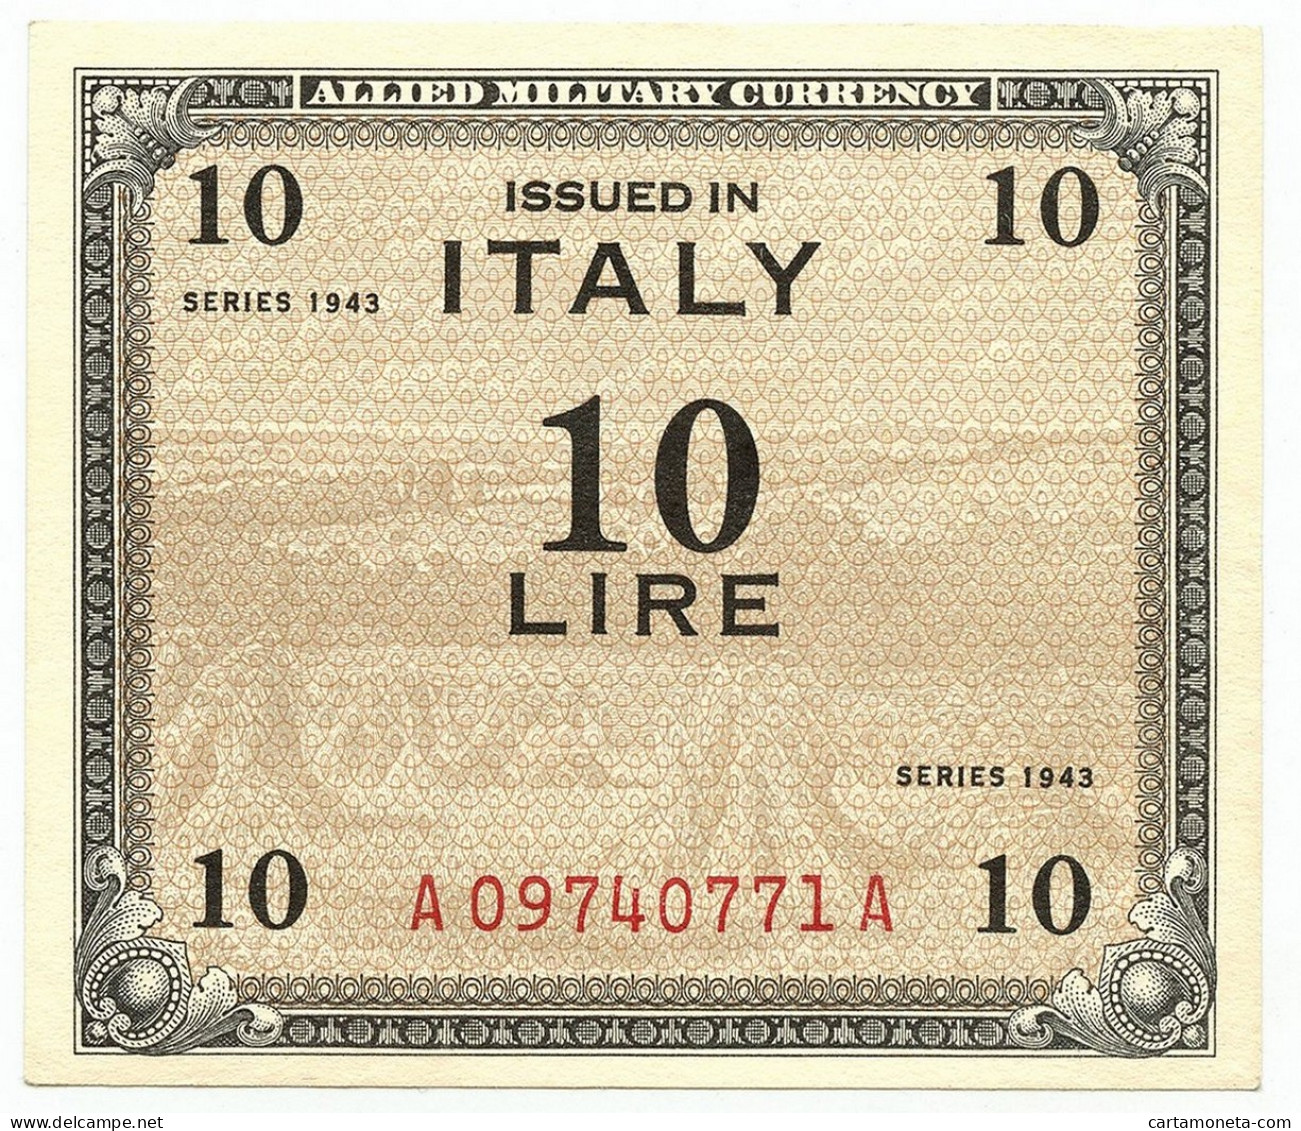 10 LIRE OCCUPAZIONE AMERICANA IN ITALIA MONOLINGUA BEP 1943 QFDS - Ocupación Aliados Segunda Guerra Mundial